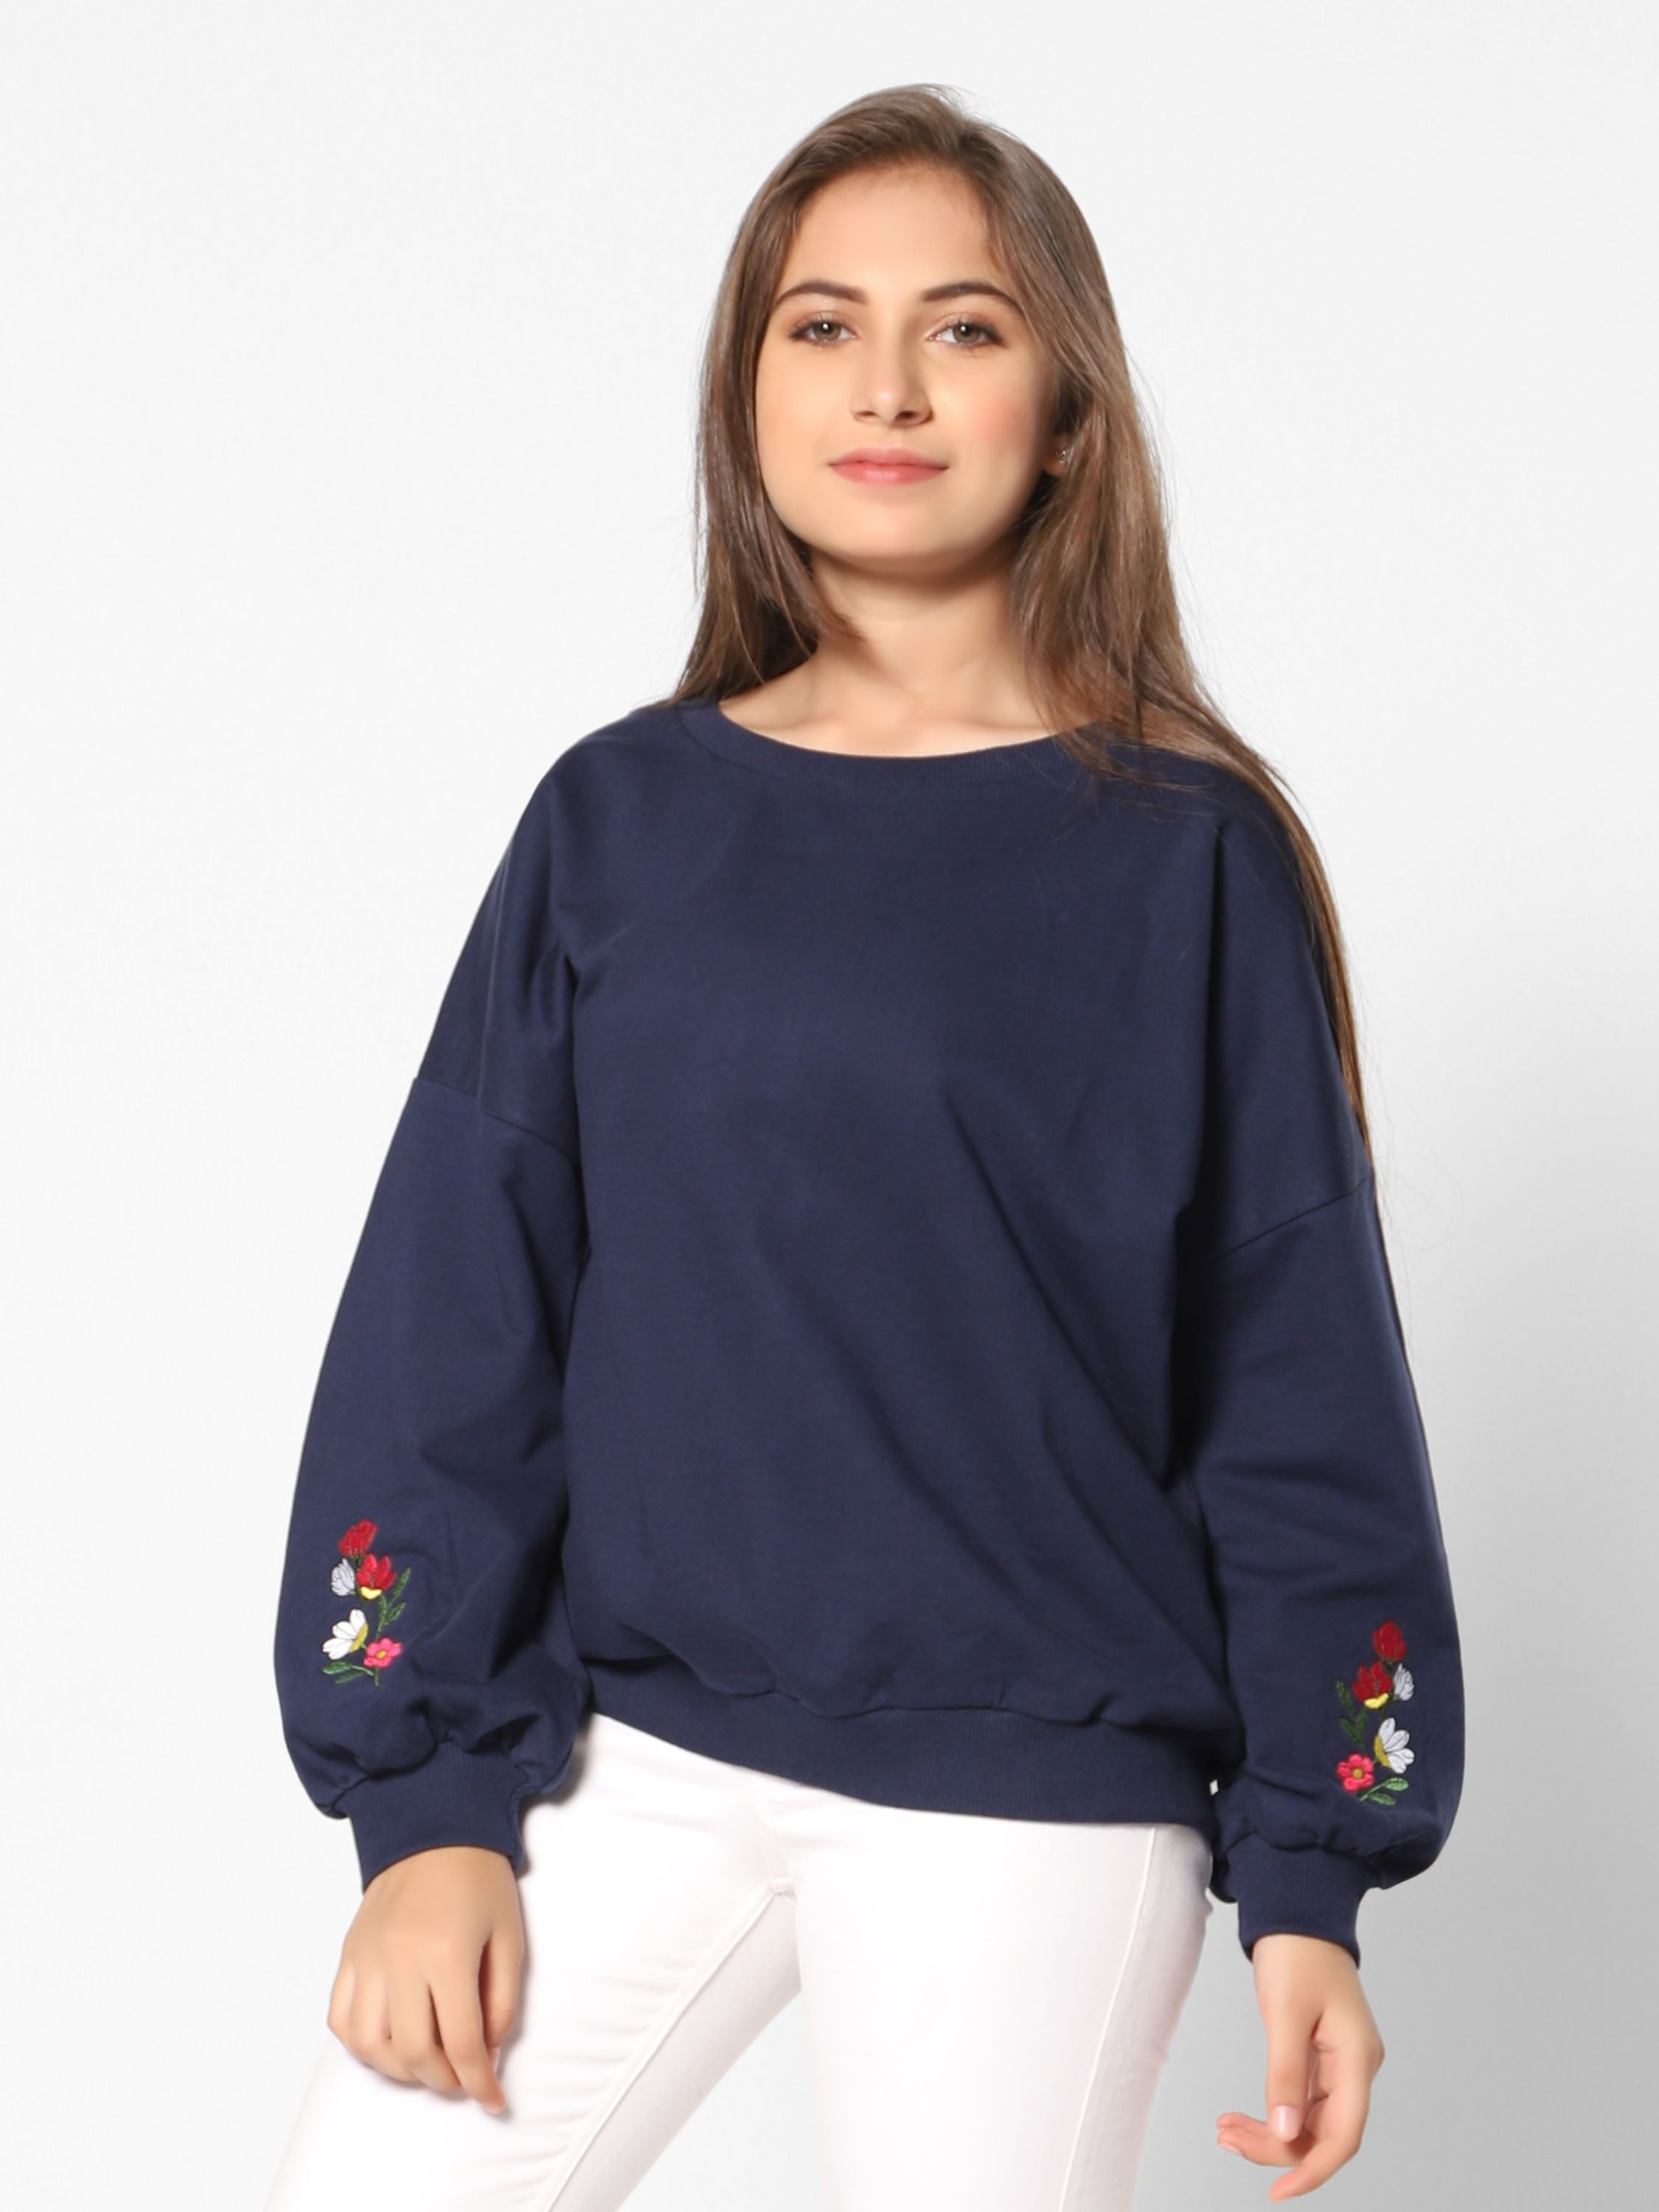 TeenTrums Girls Sweat top - flower on sleeves embroidery- Navy